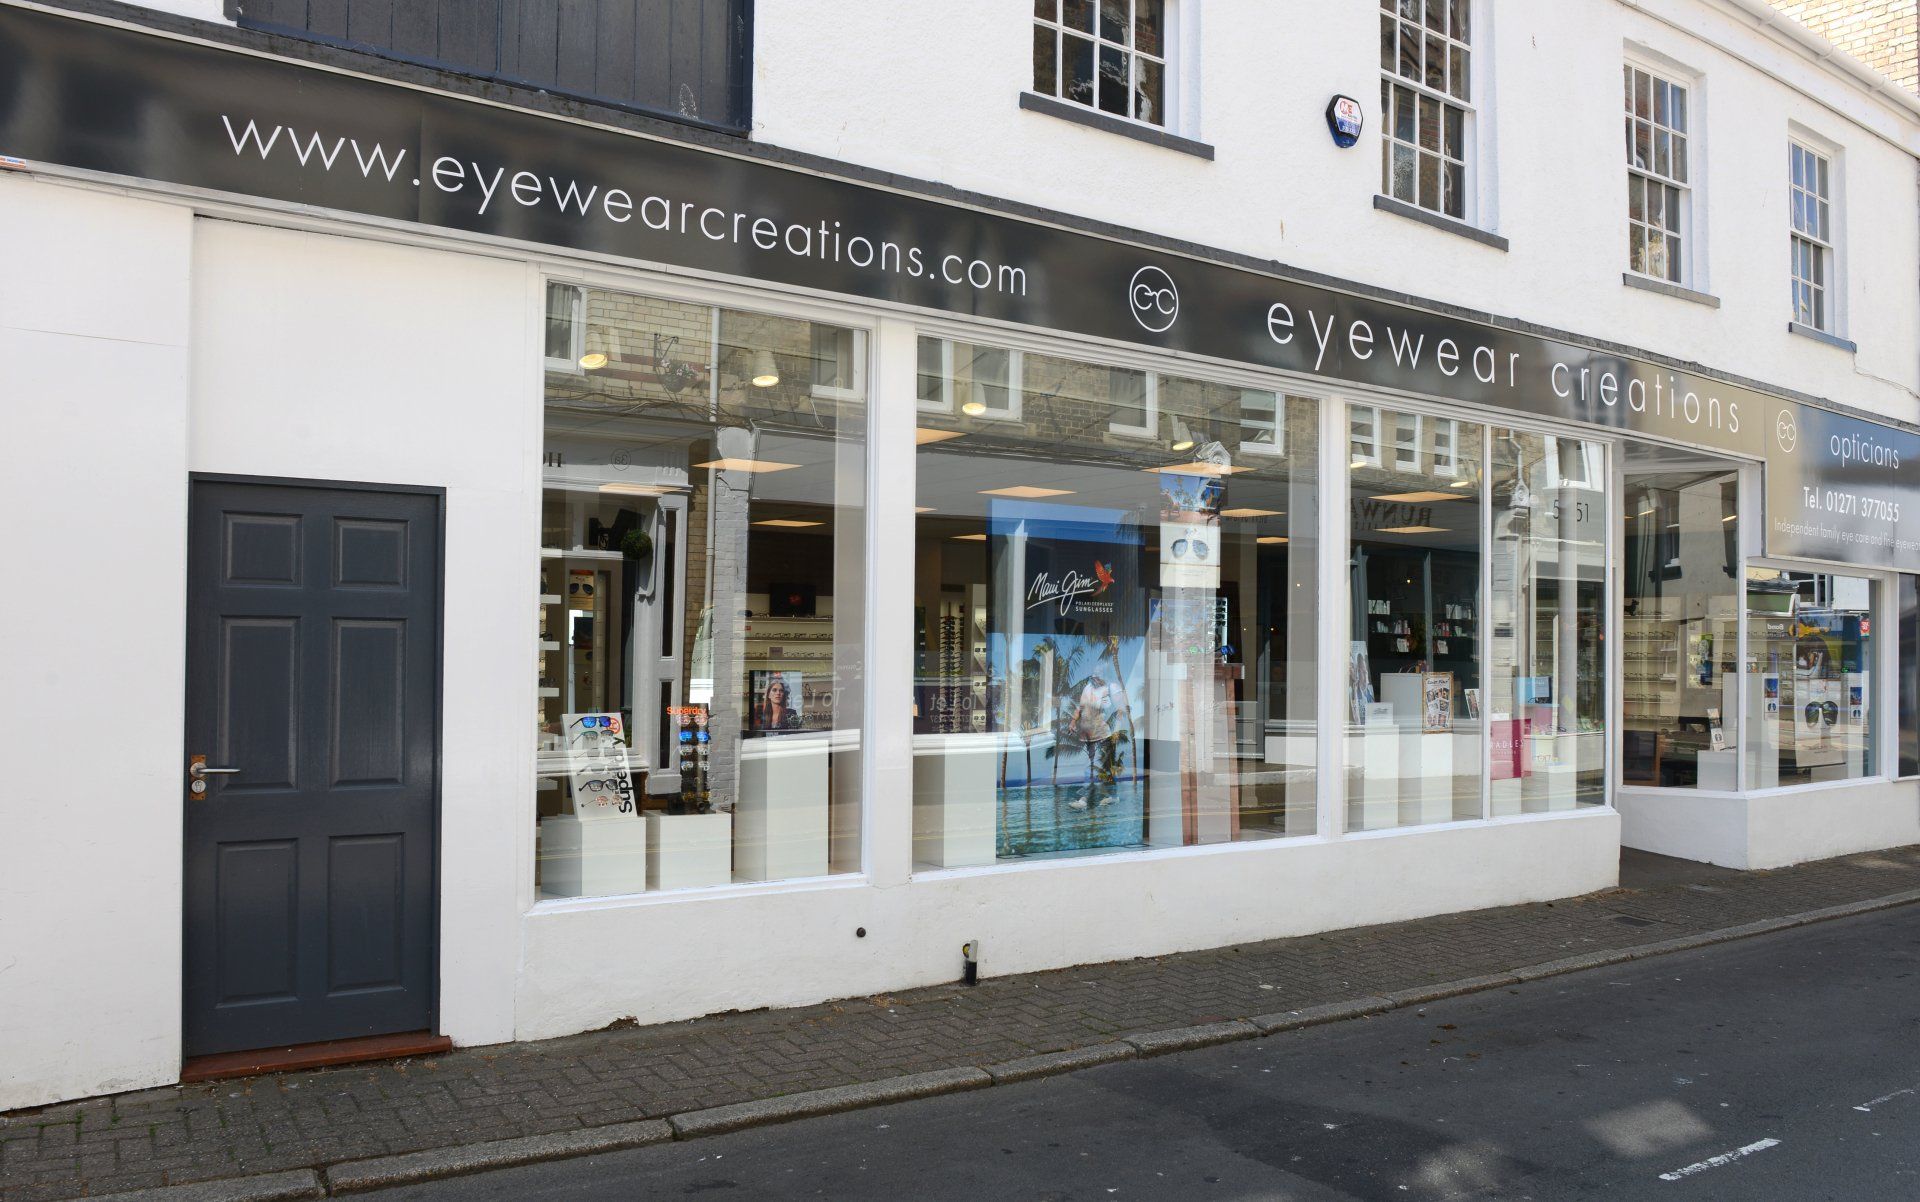 External view of Eyewear Creations opticians during daylight